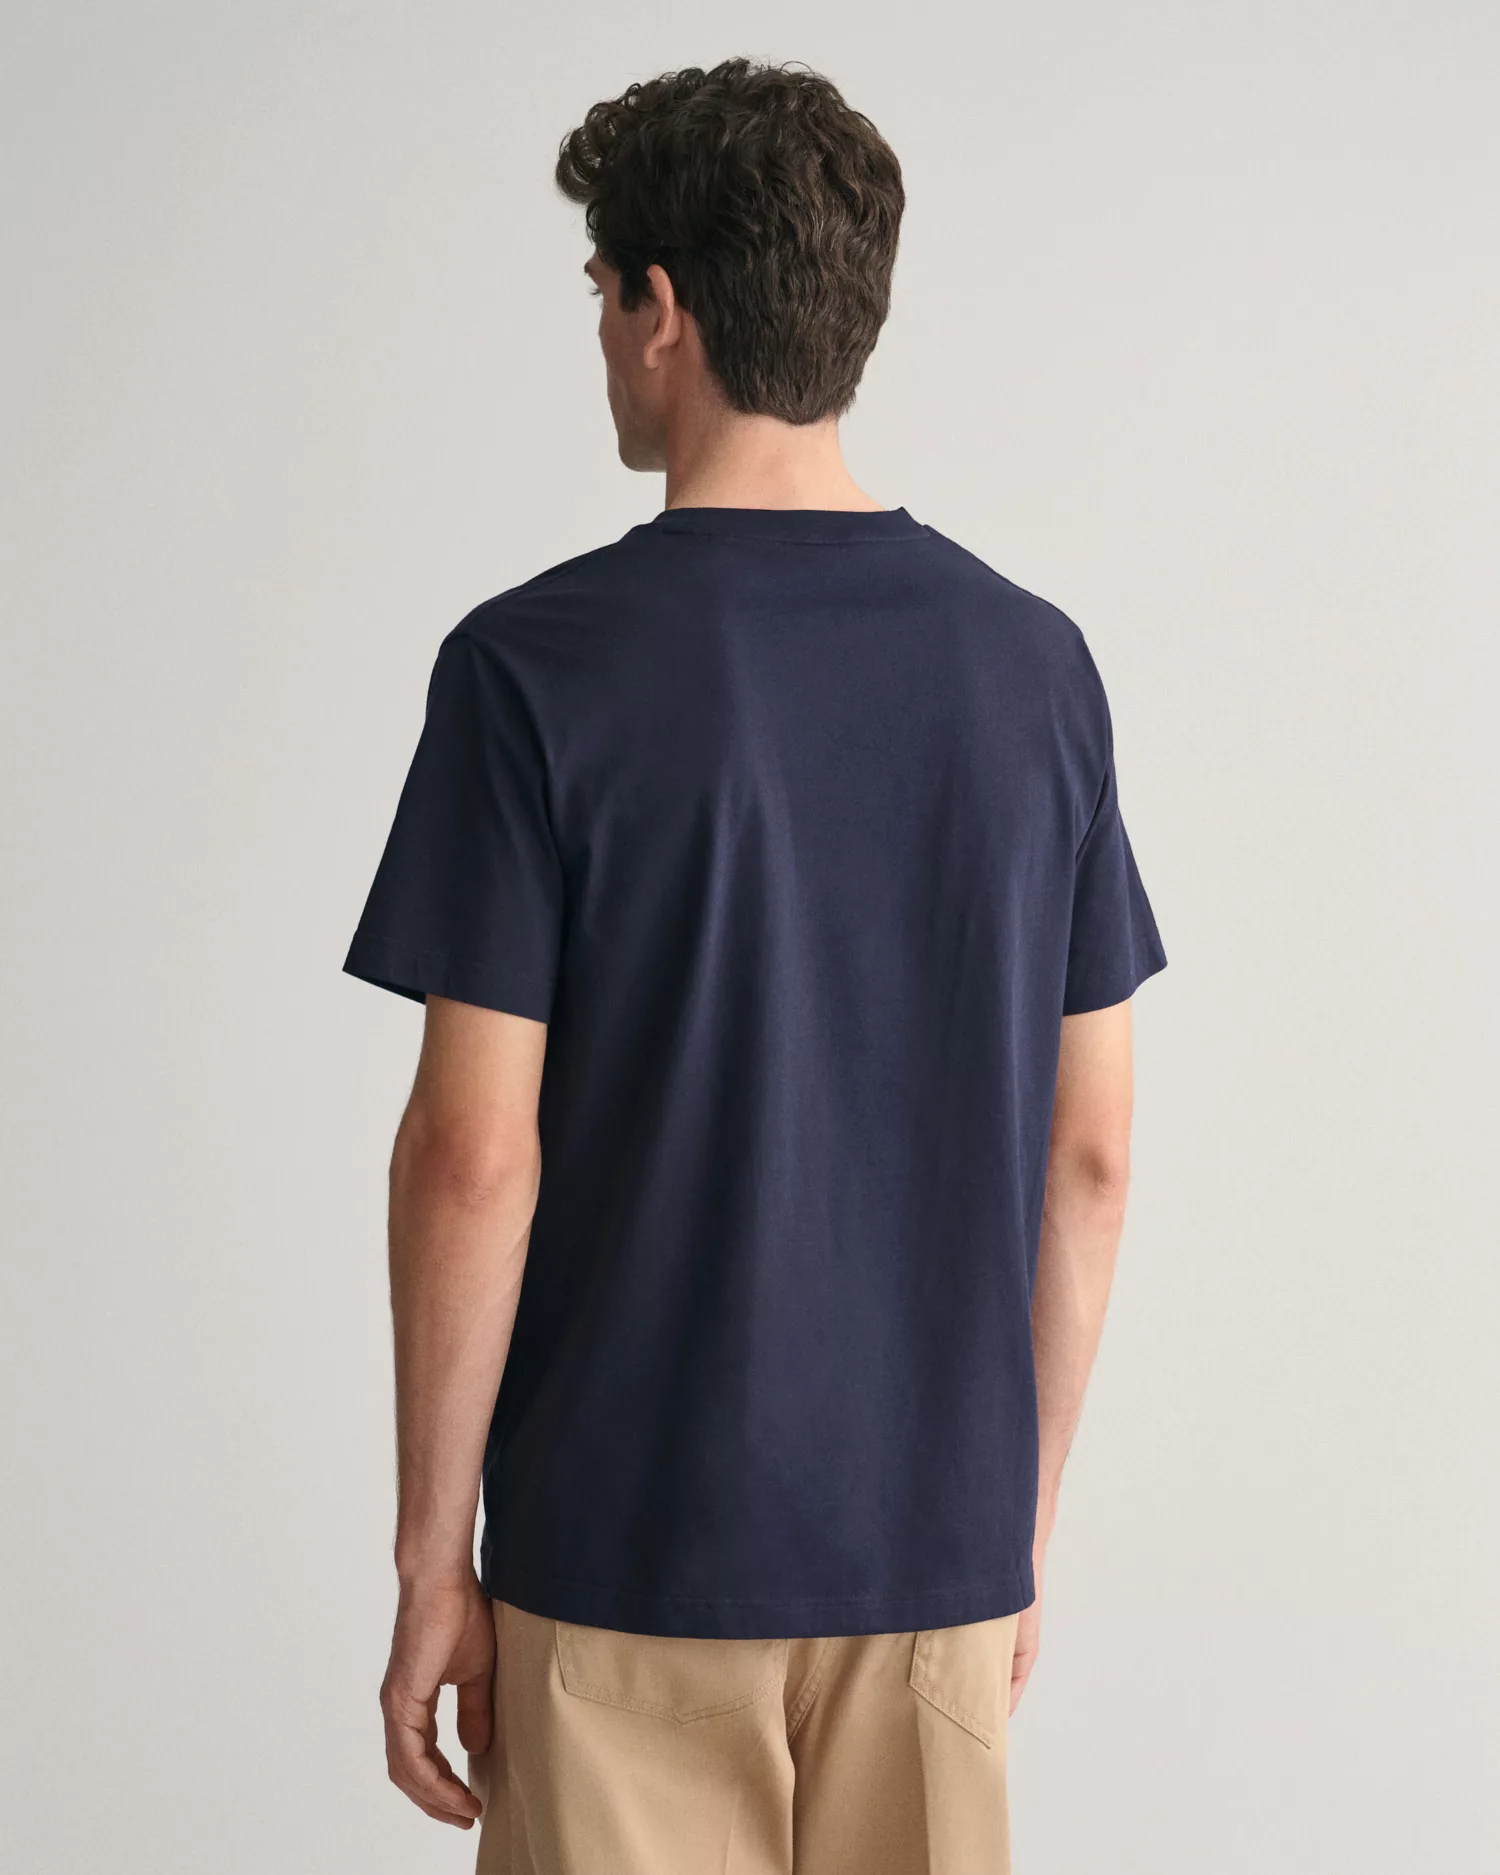 Gant T-Shirt CONTRAST SMALL LOGO TSHIRT günstig online kaufen